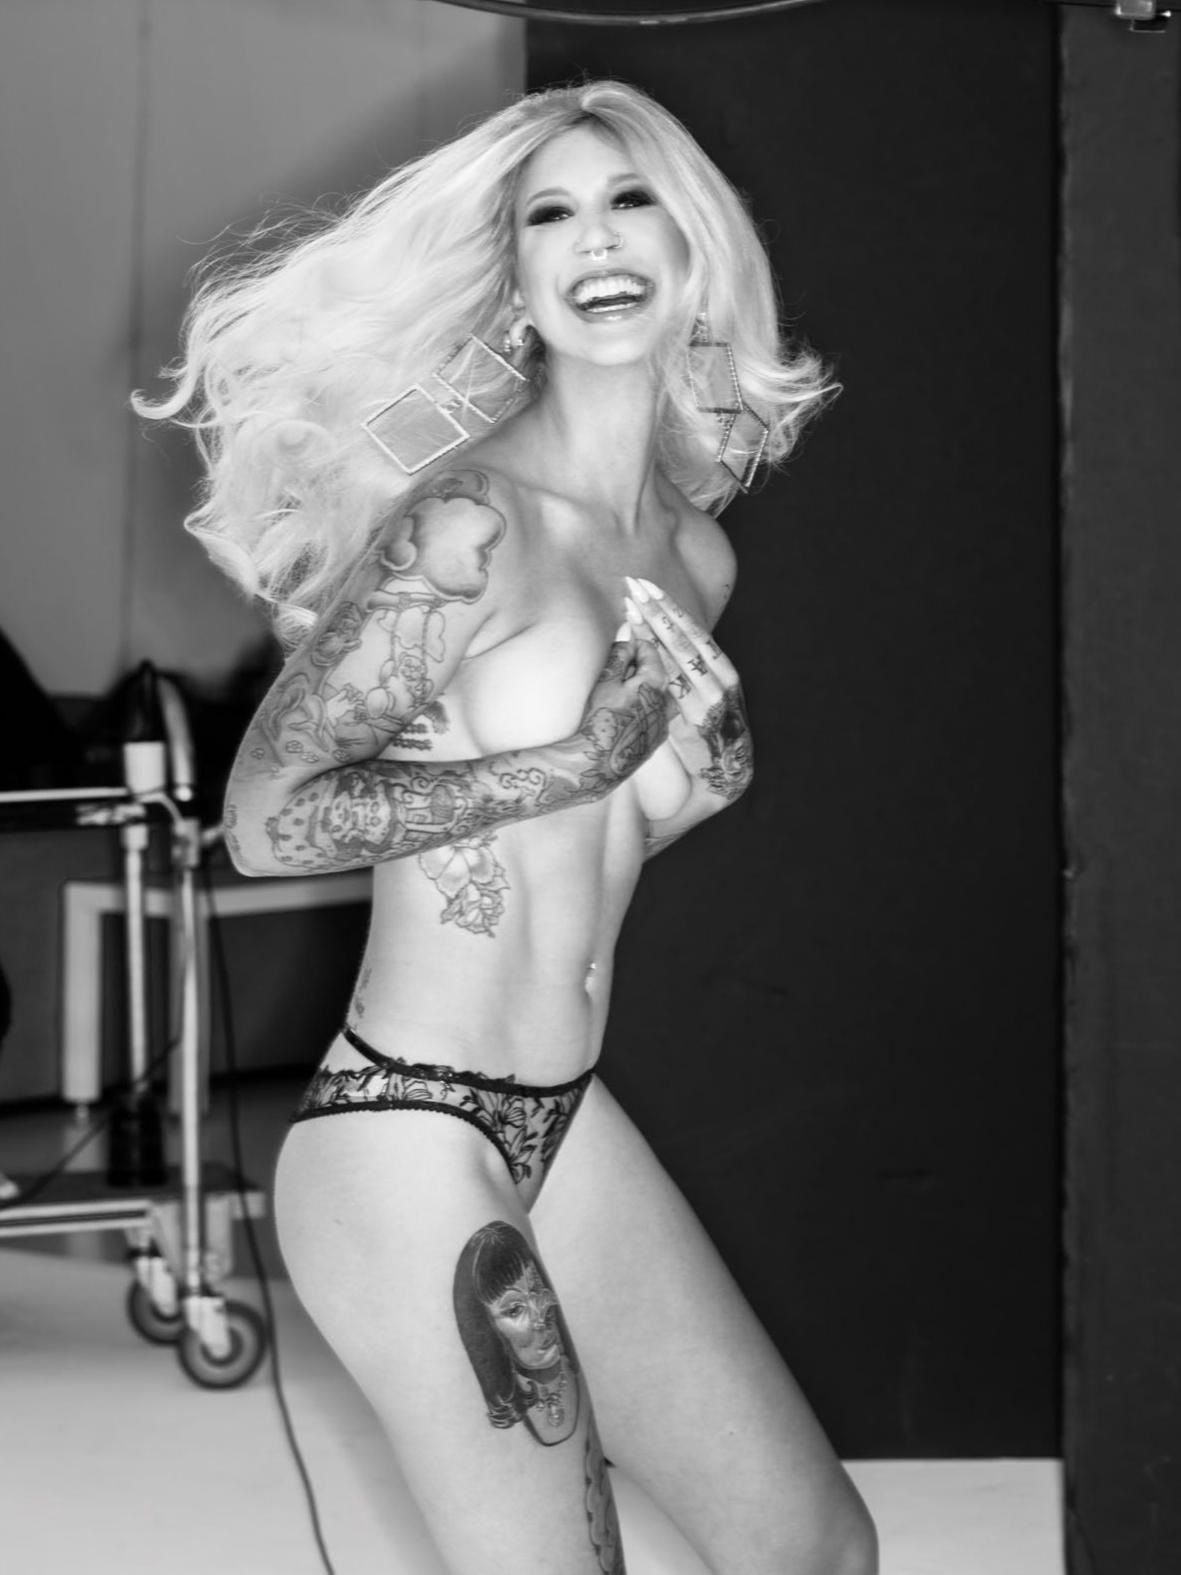 Jessica Carter - Sexy Body in Lingerie for Maxim Magazine. 